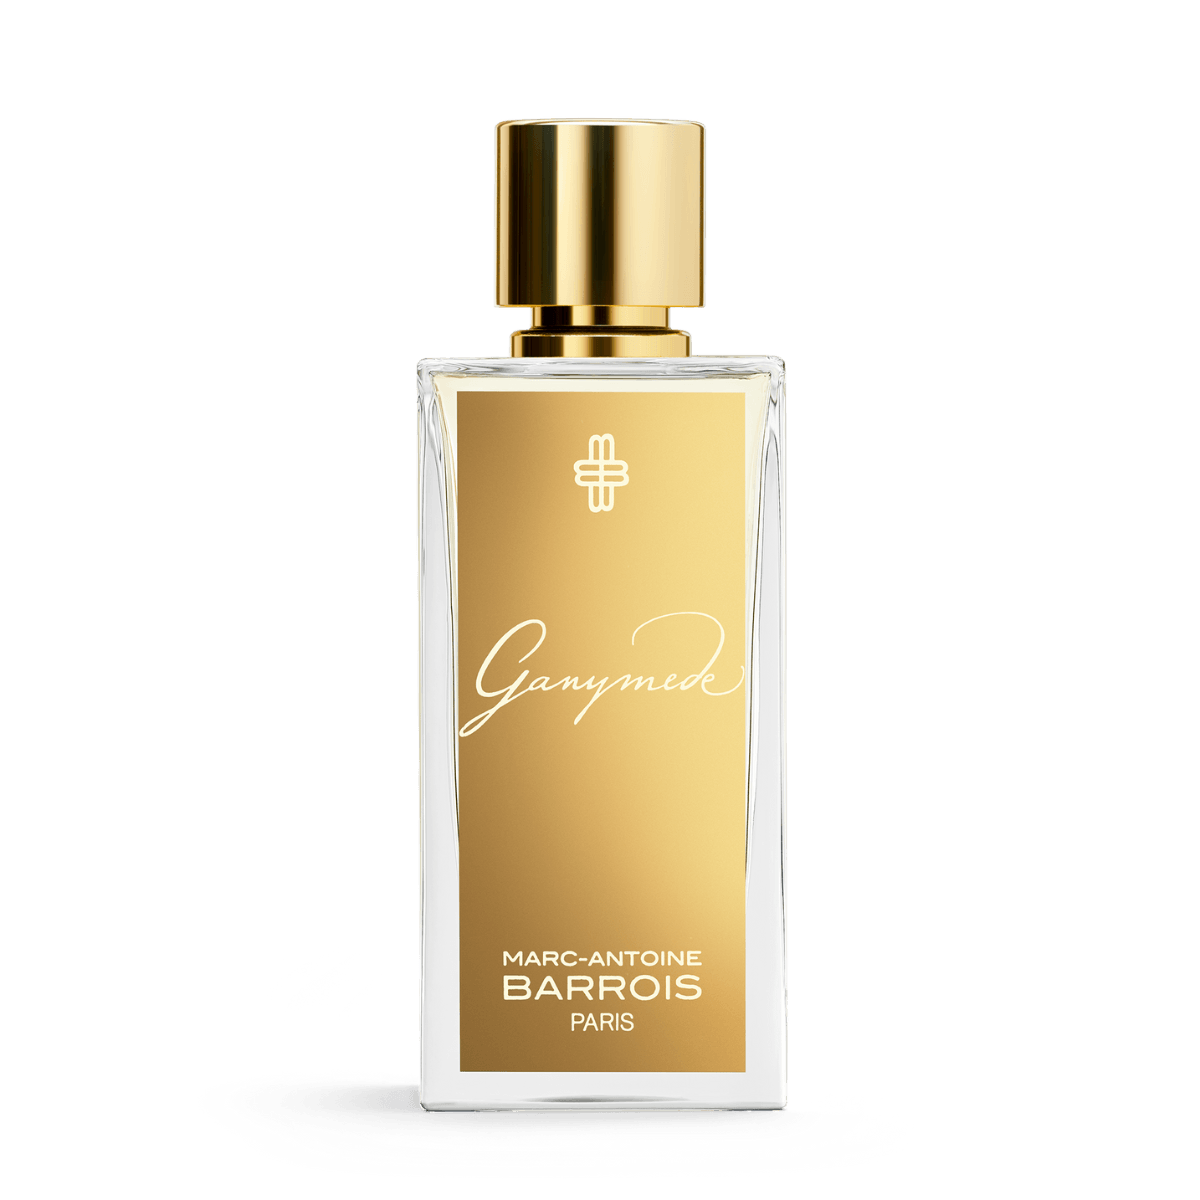 Afbeelding van Ganymede eau de parfum 100 ml van het merk Marc-Antoine Barrois